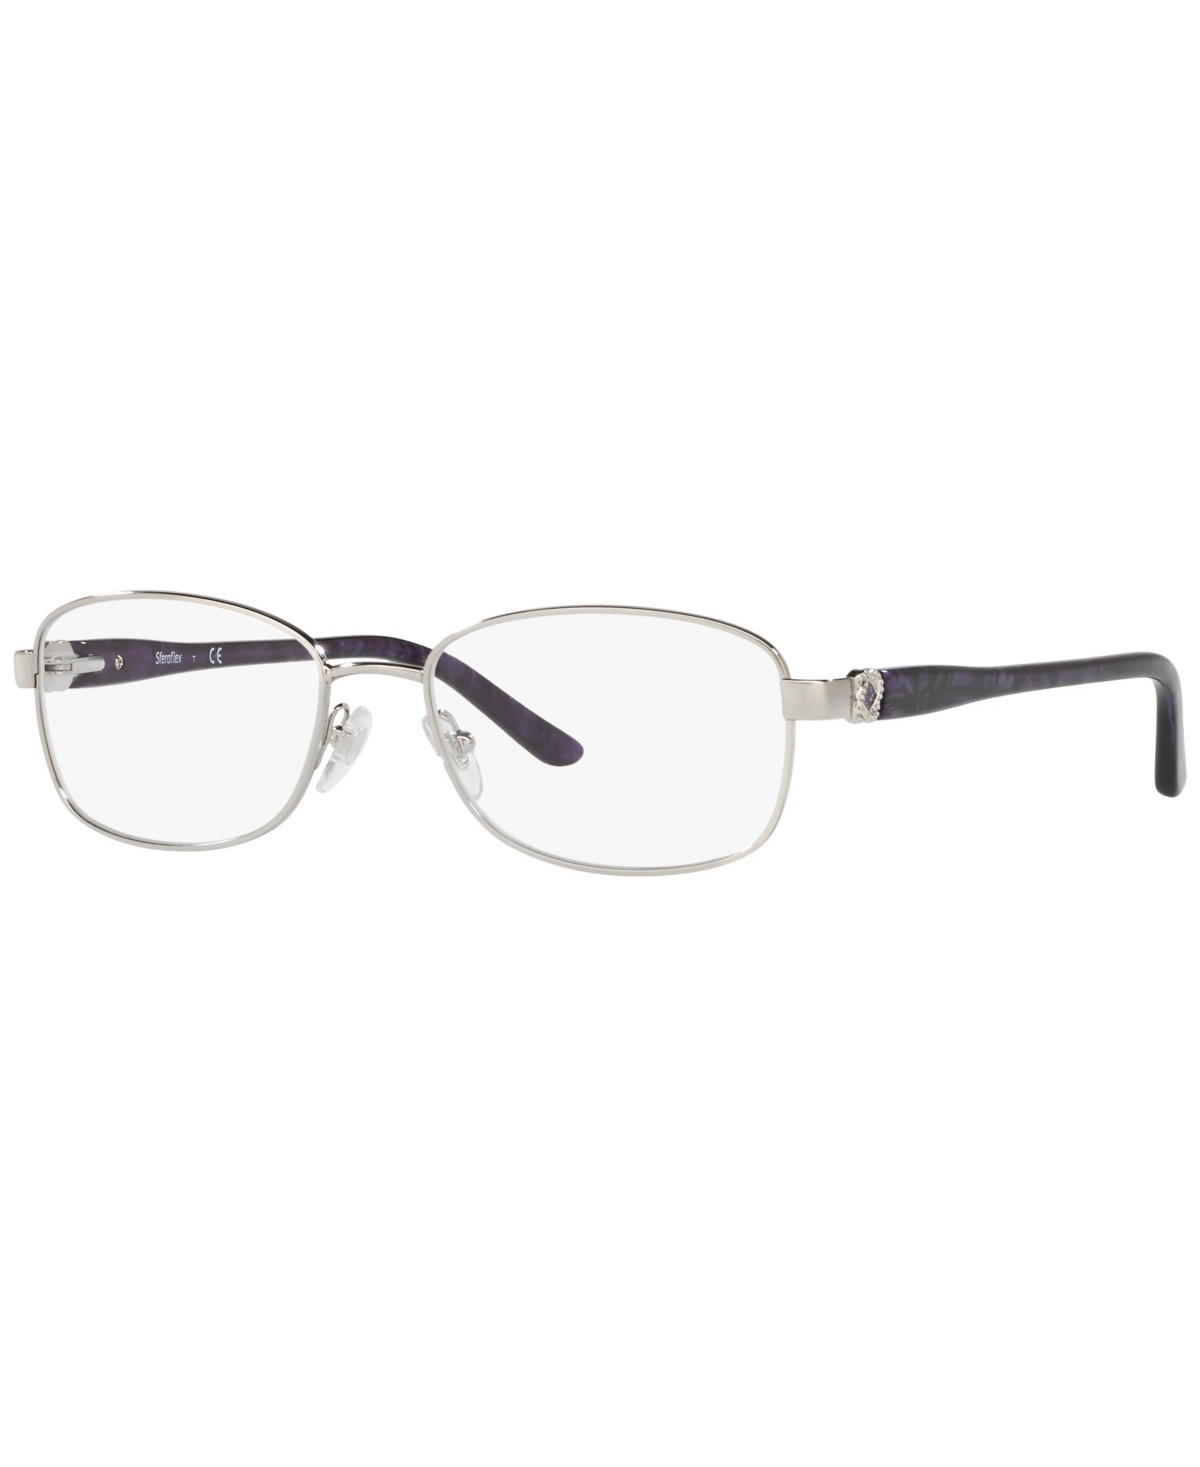 Women's Eyeglasses, SF2570 54 - Shiny Silver